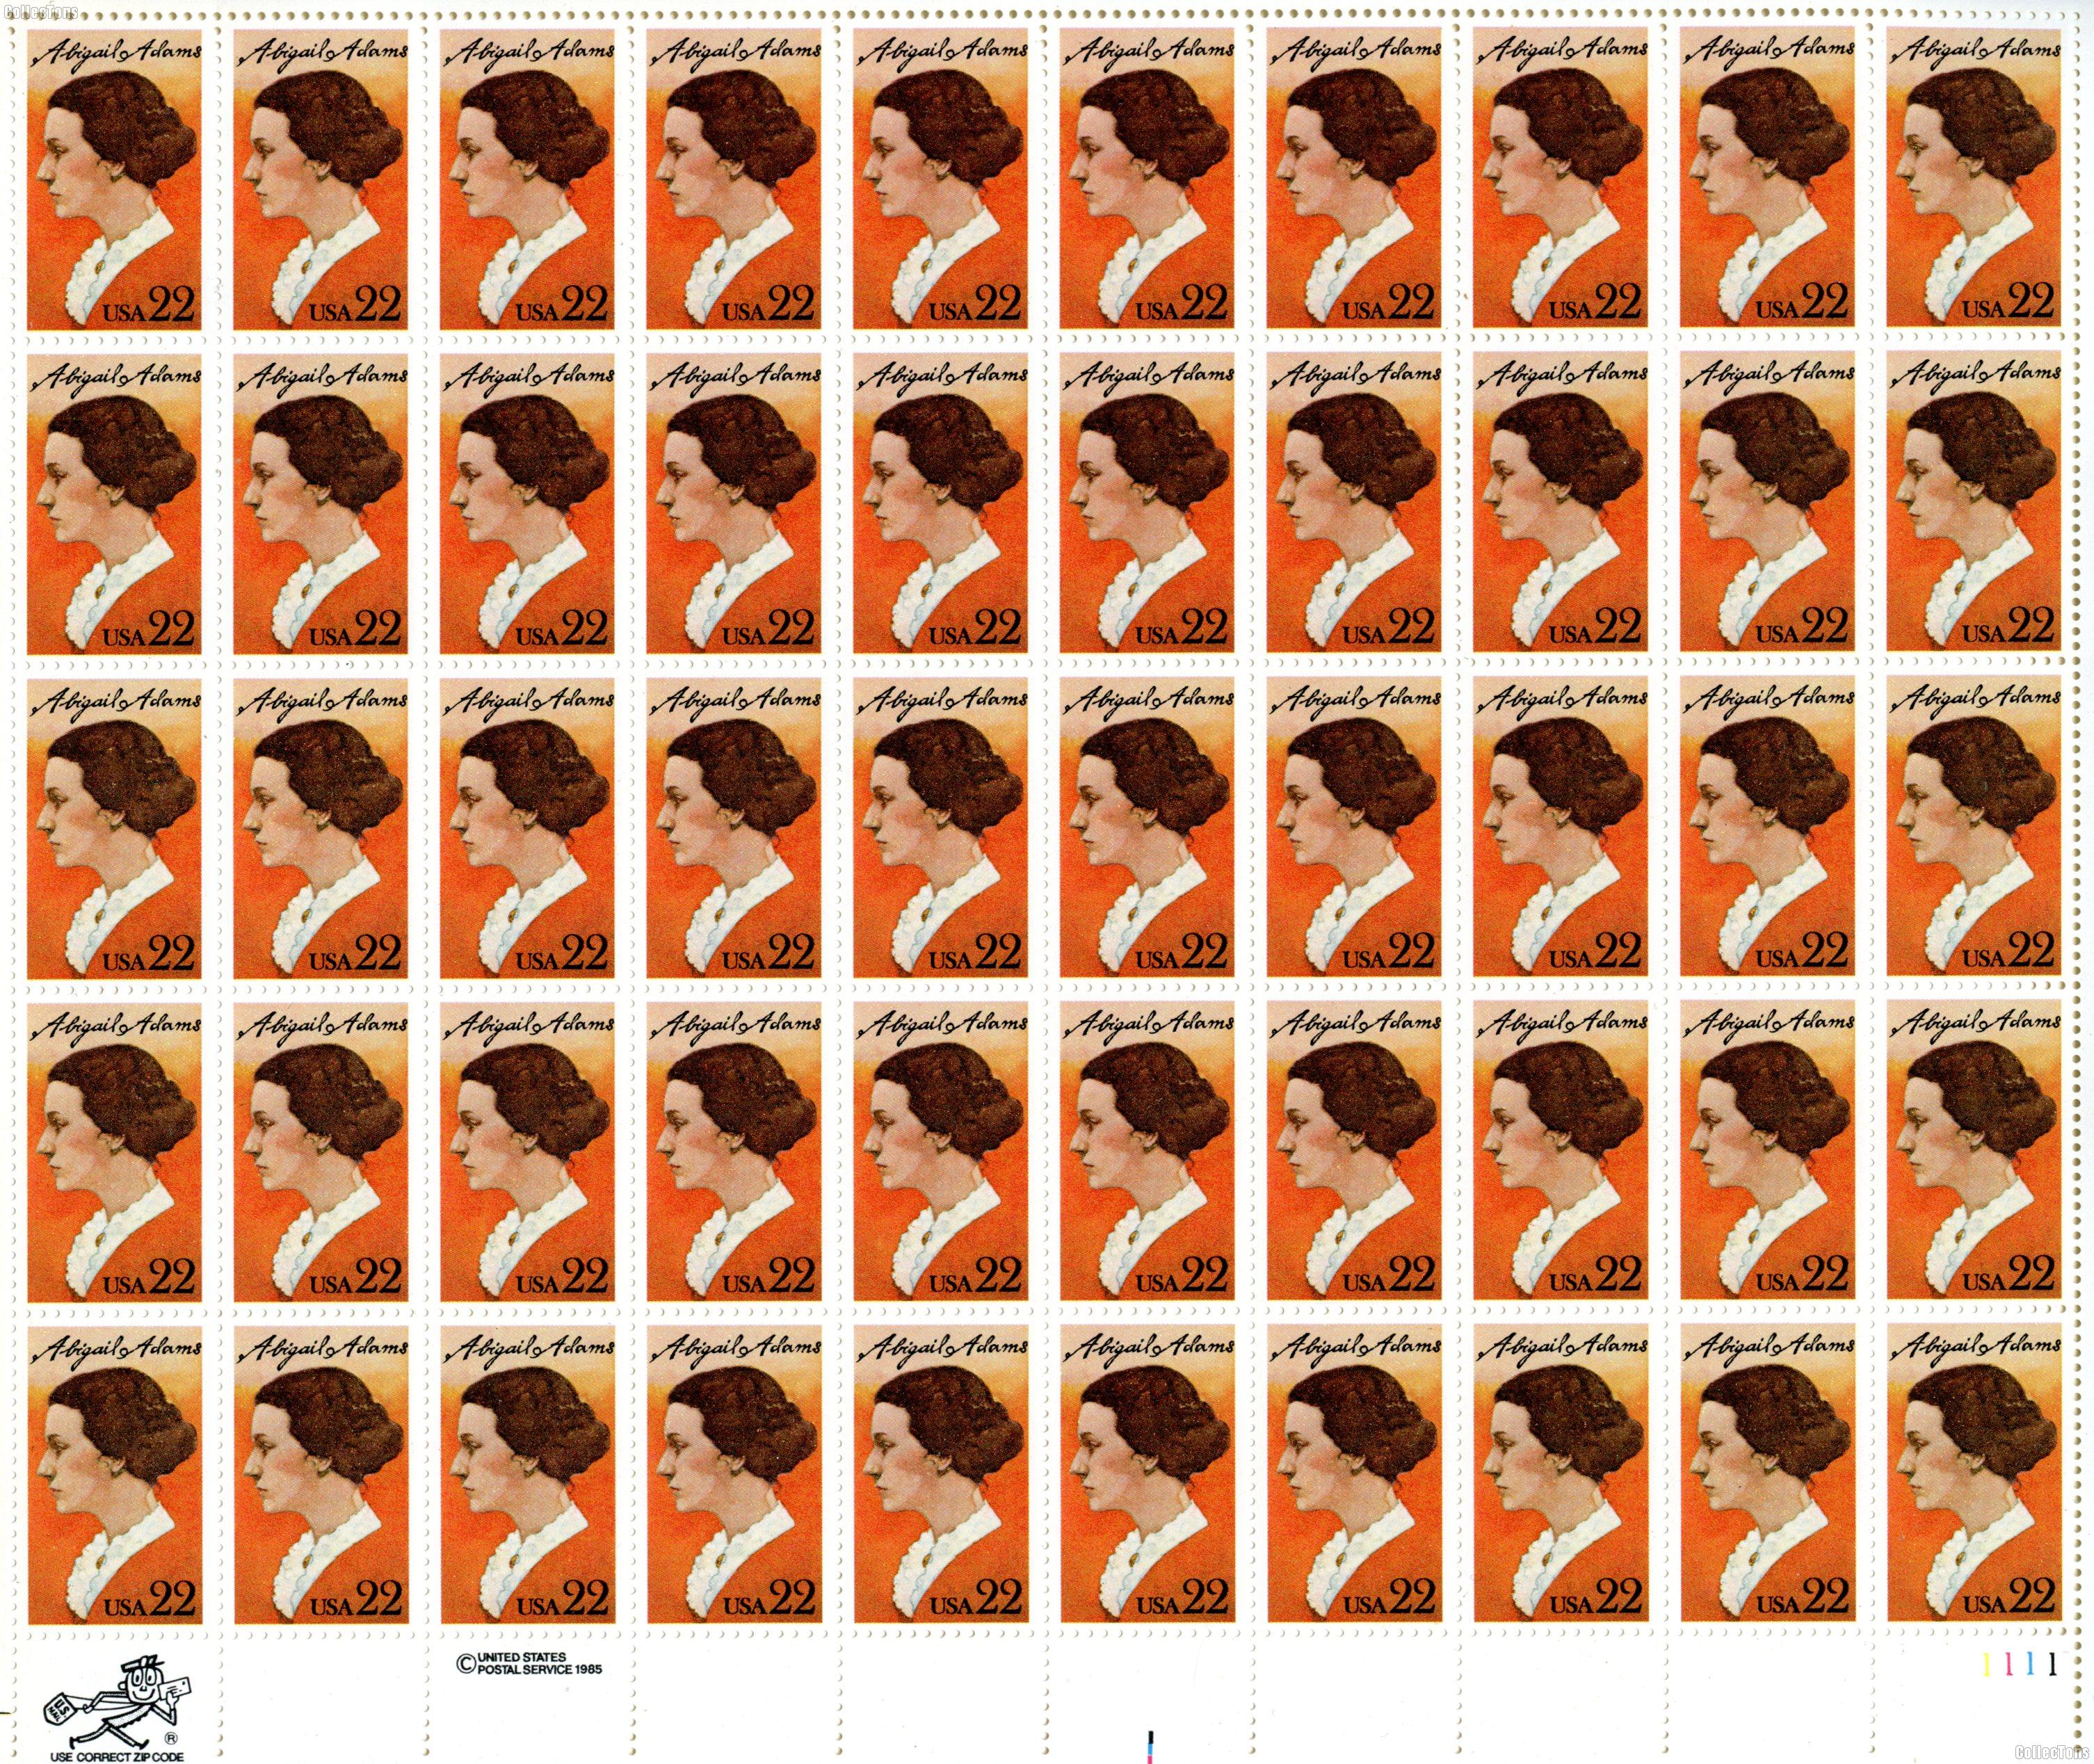 1985 Abigail Adams 22 Cent US Postage Stamp MNH Sheet of 50 Scott #2146